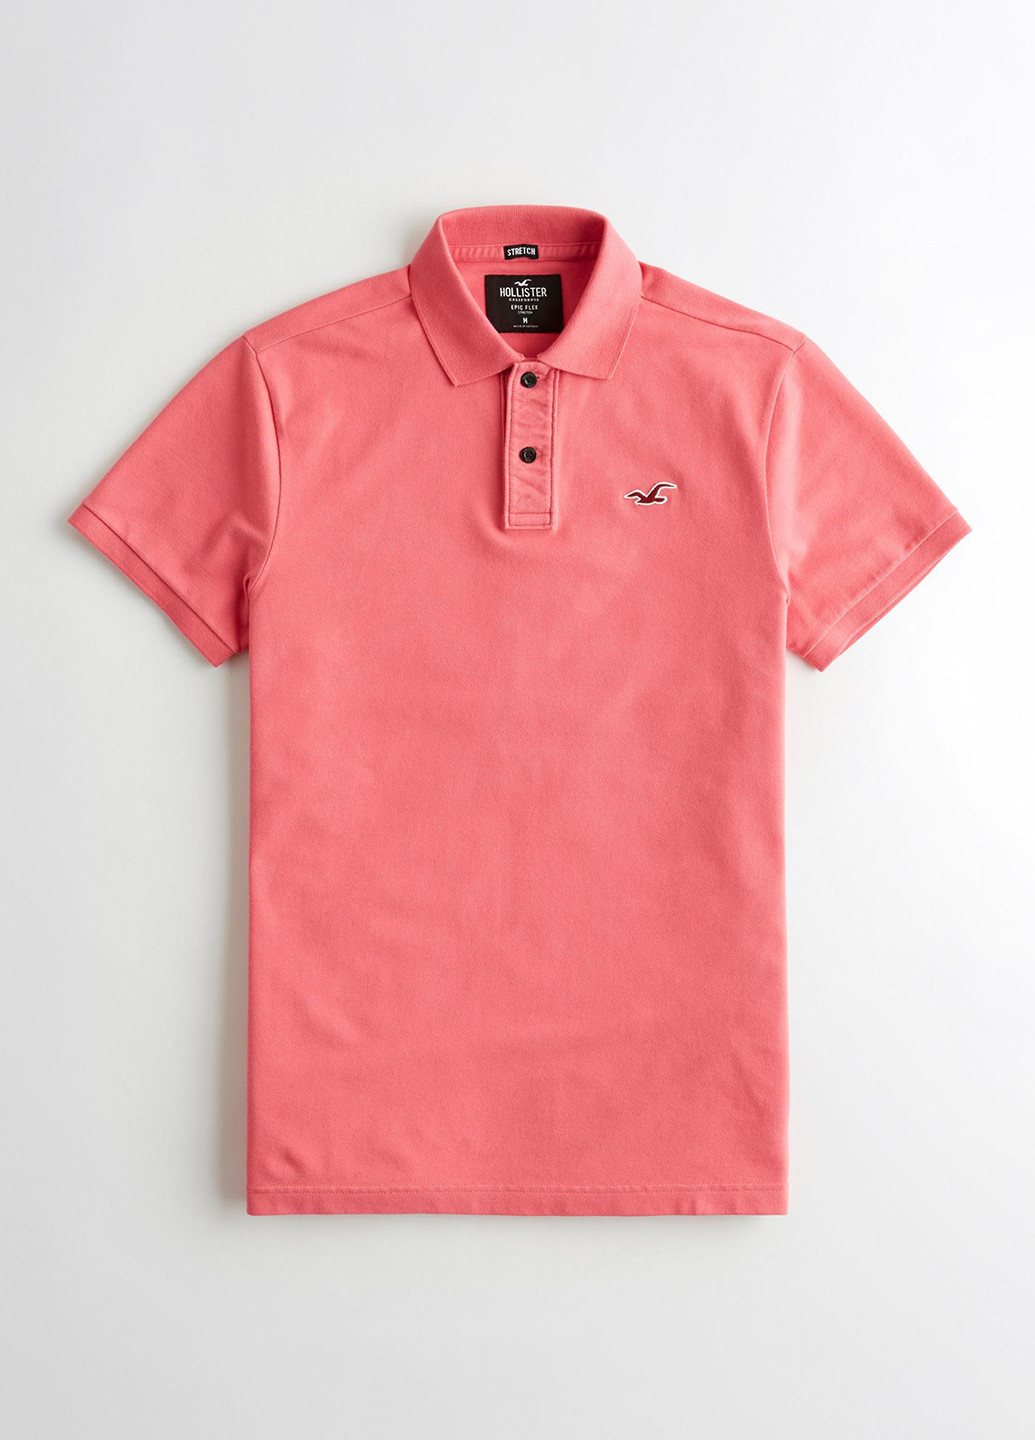 Розовая футболка-поло для мужчин Hollister с логотипом